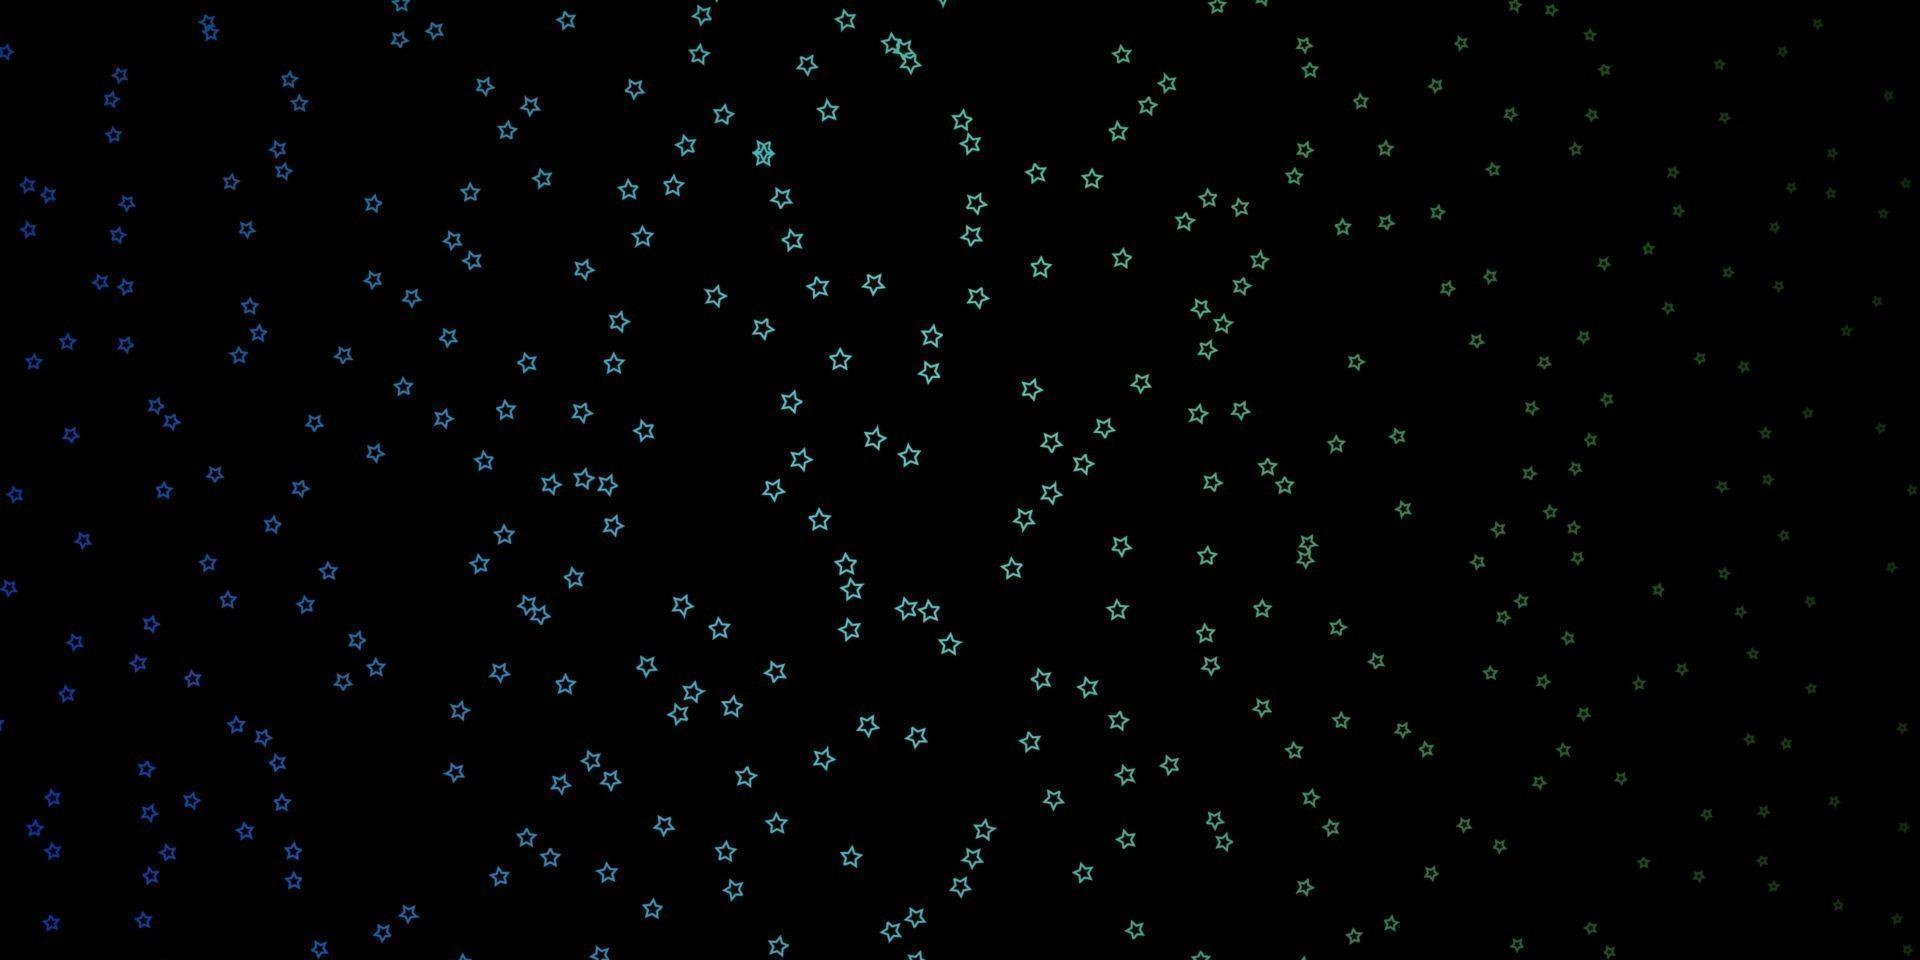 textura de vector azul oscuro, verde con hermosas estrellas.